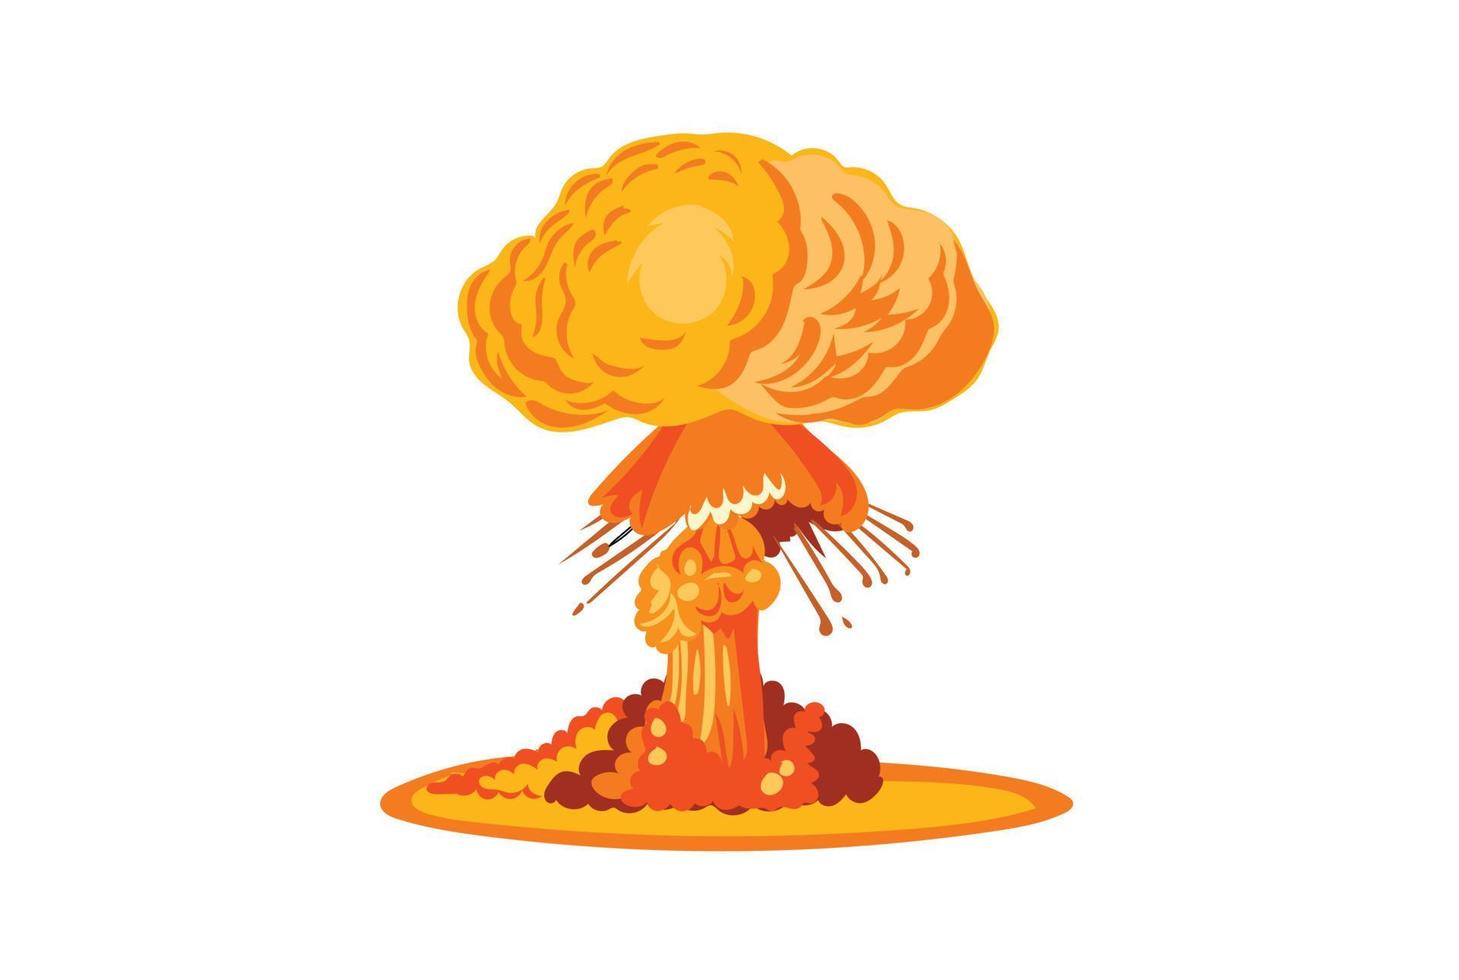 nucleair explosie, Hiroshima dag illustratie vector